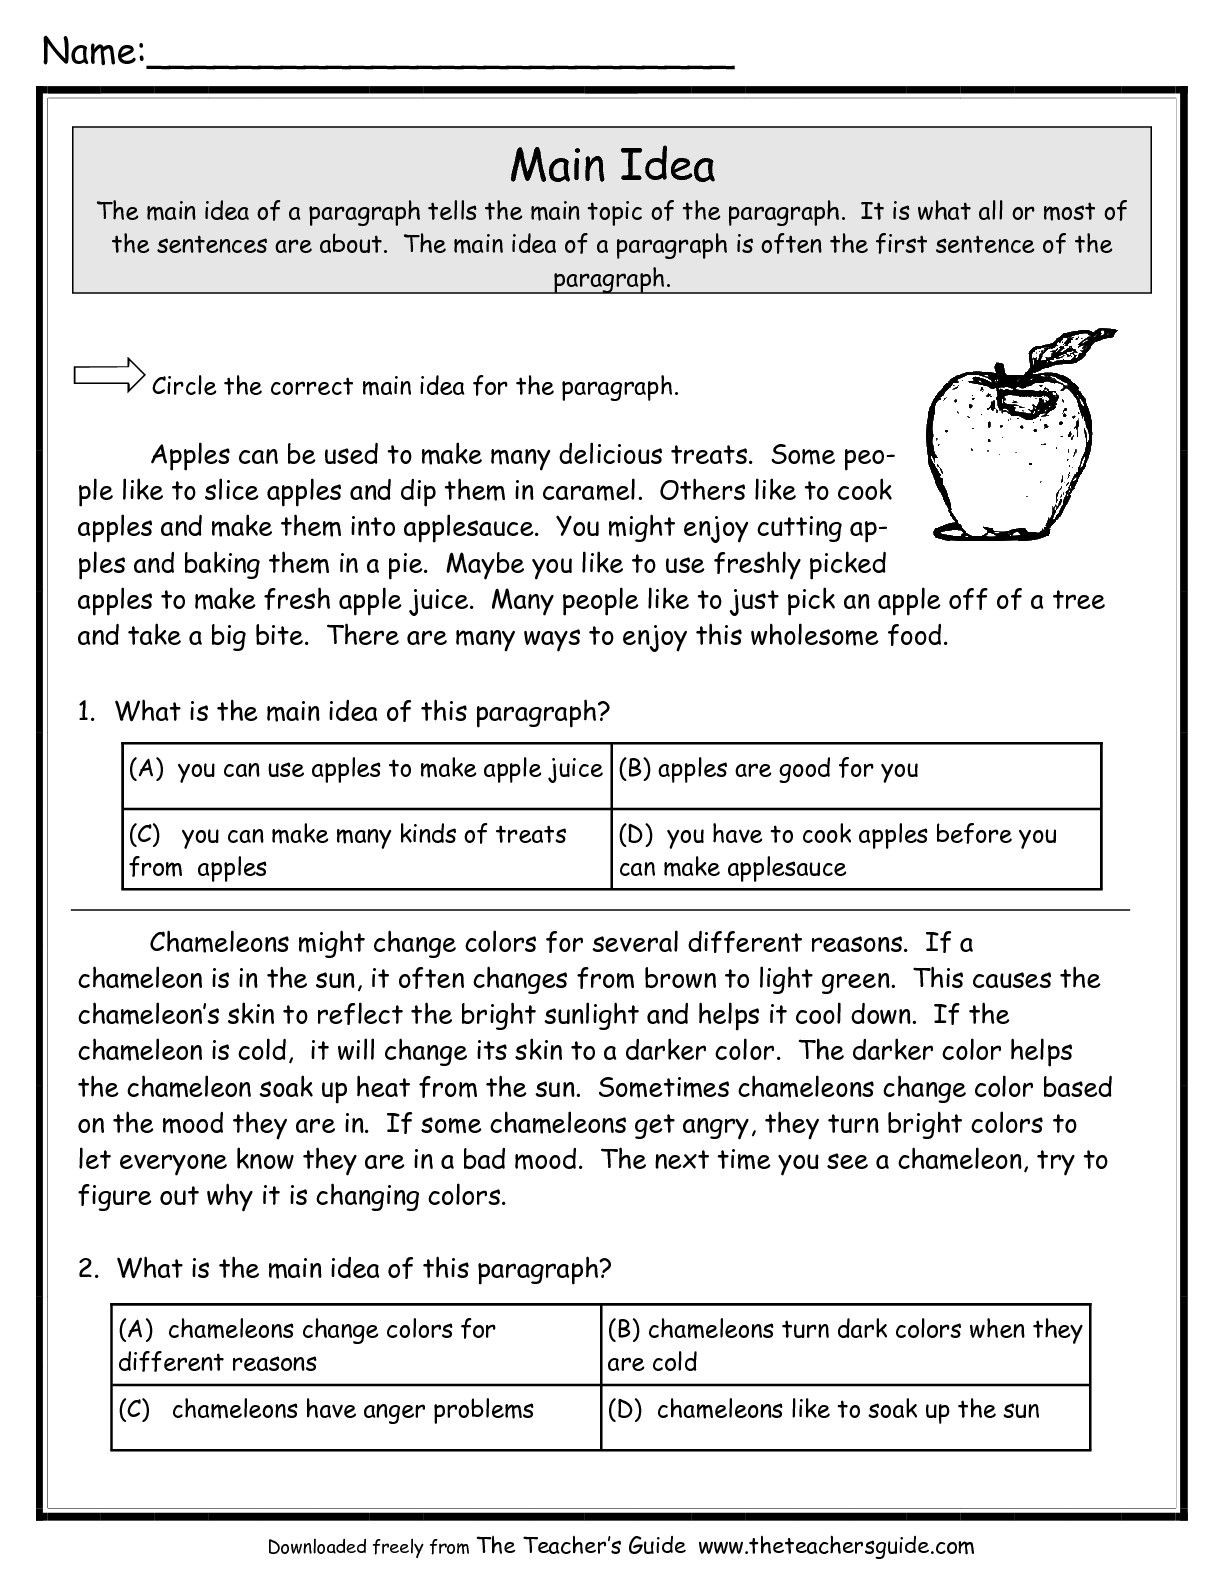 Main Idea Worksheets Third Grade Main Idea Worksheets From the Teacher S